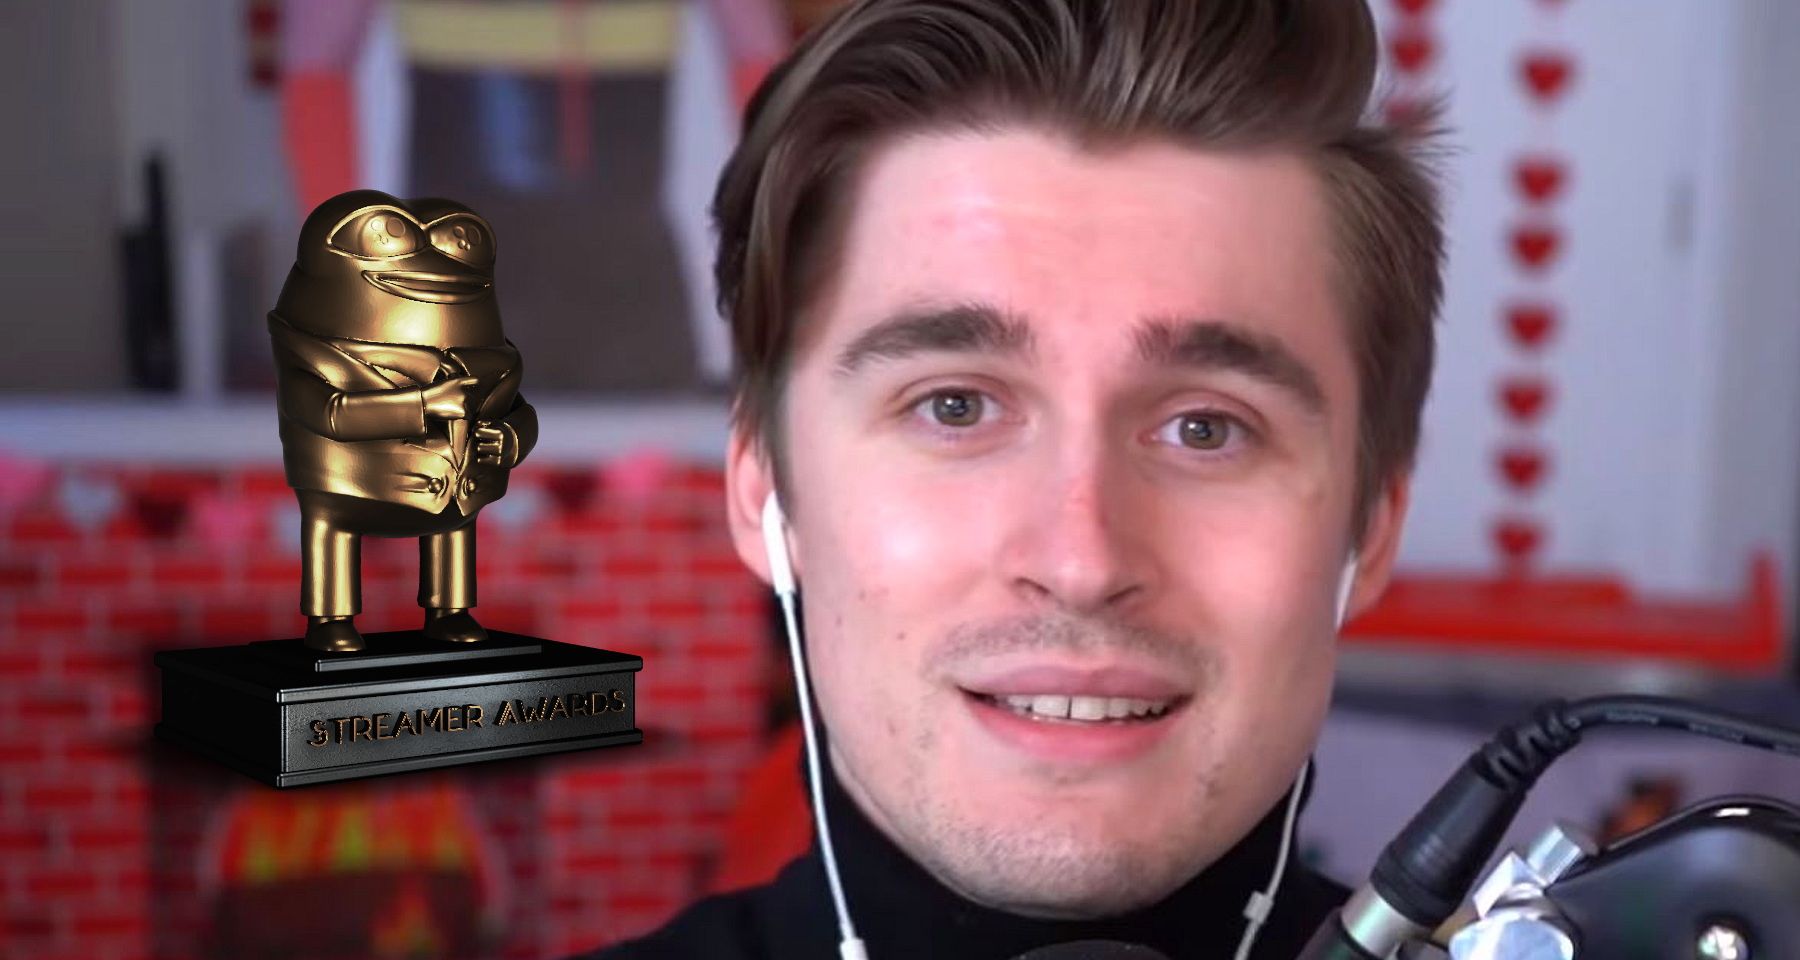 Ludwig Wins Streamer of the Year Award